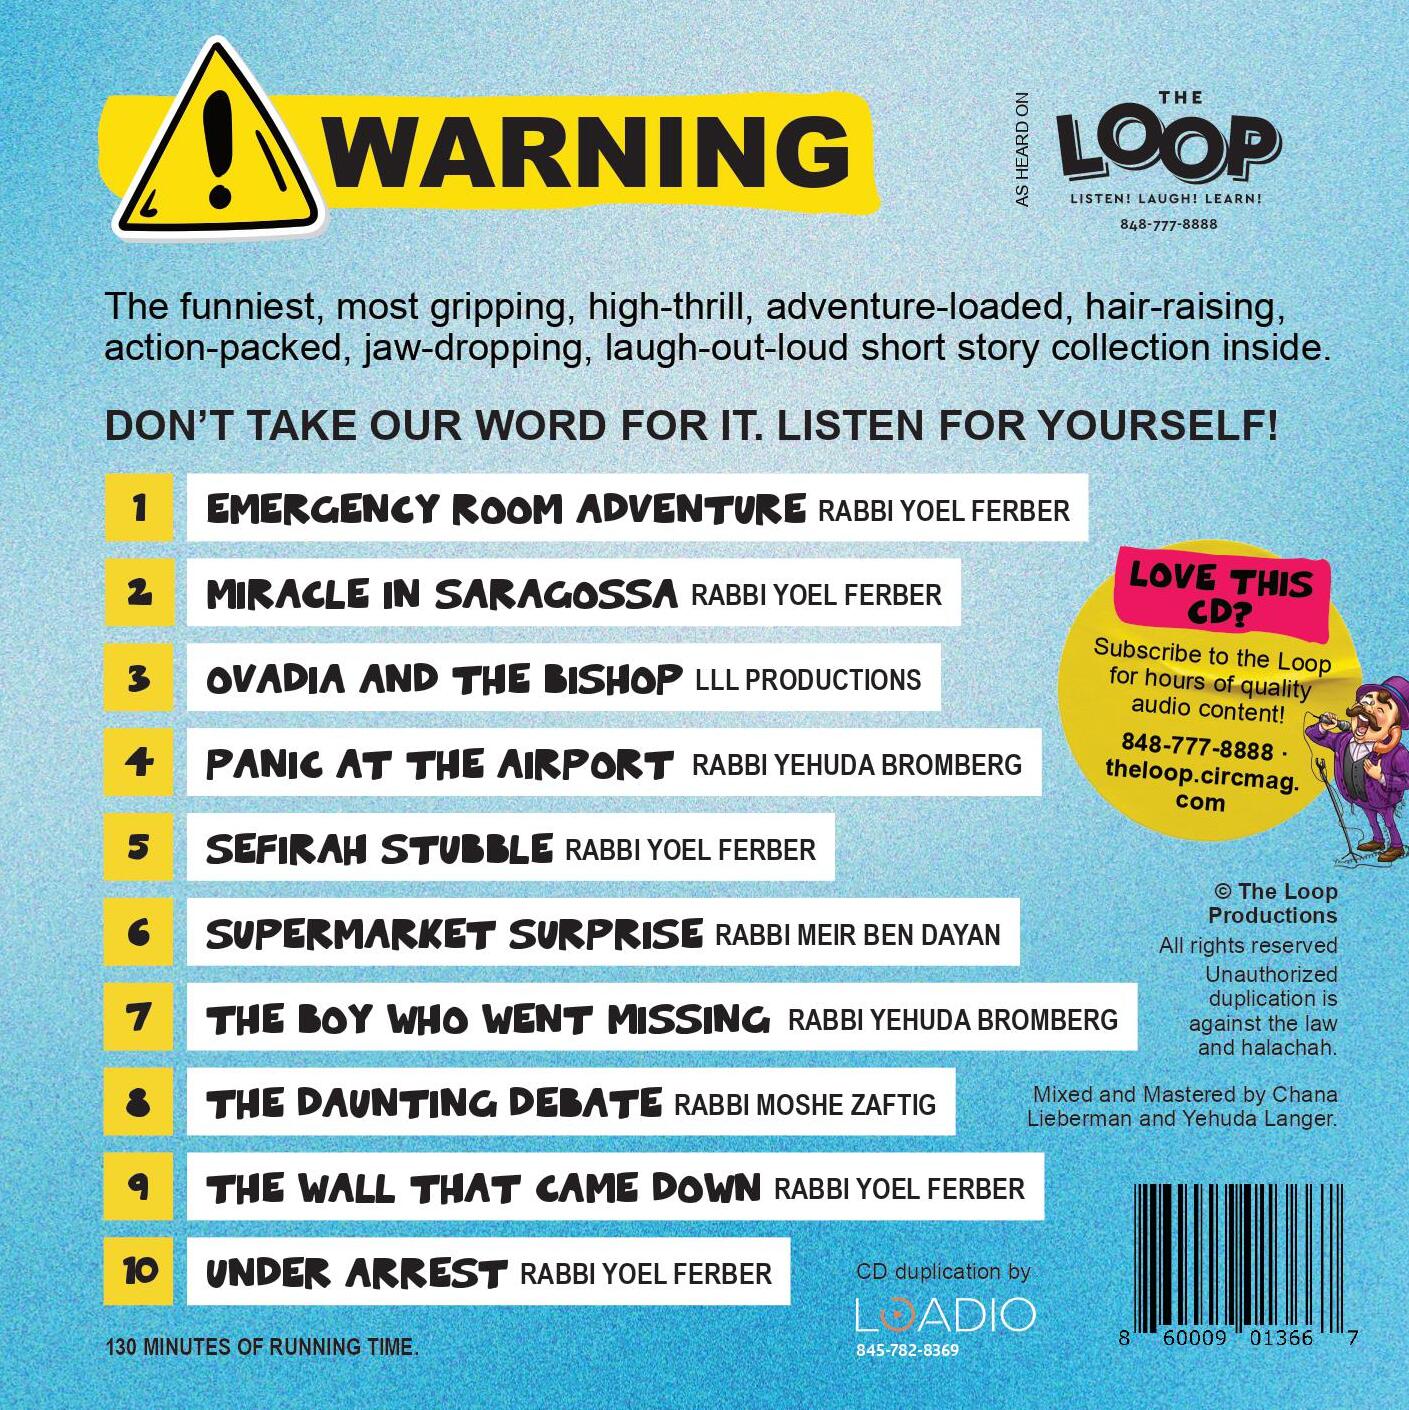 The Loop - Warning